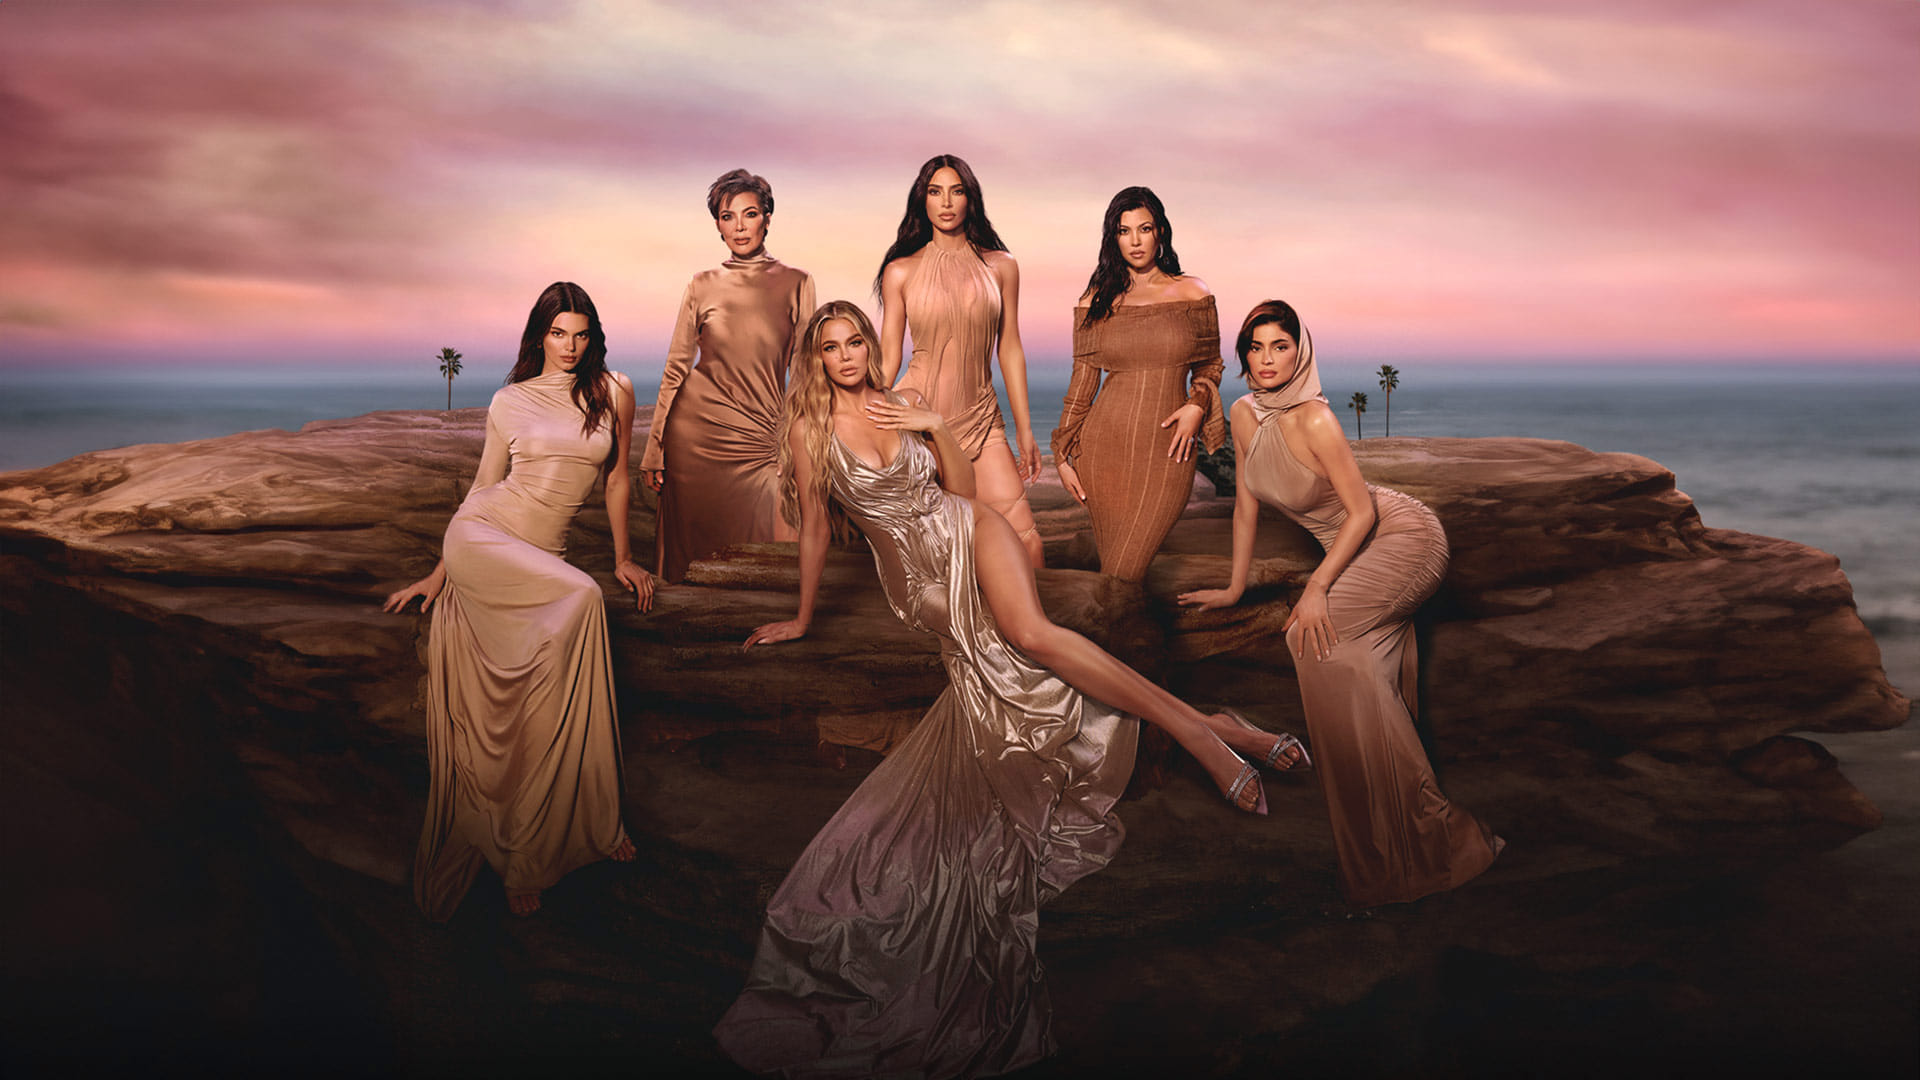 The Kardashians - Season 1 Episode 7